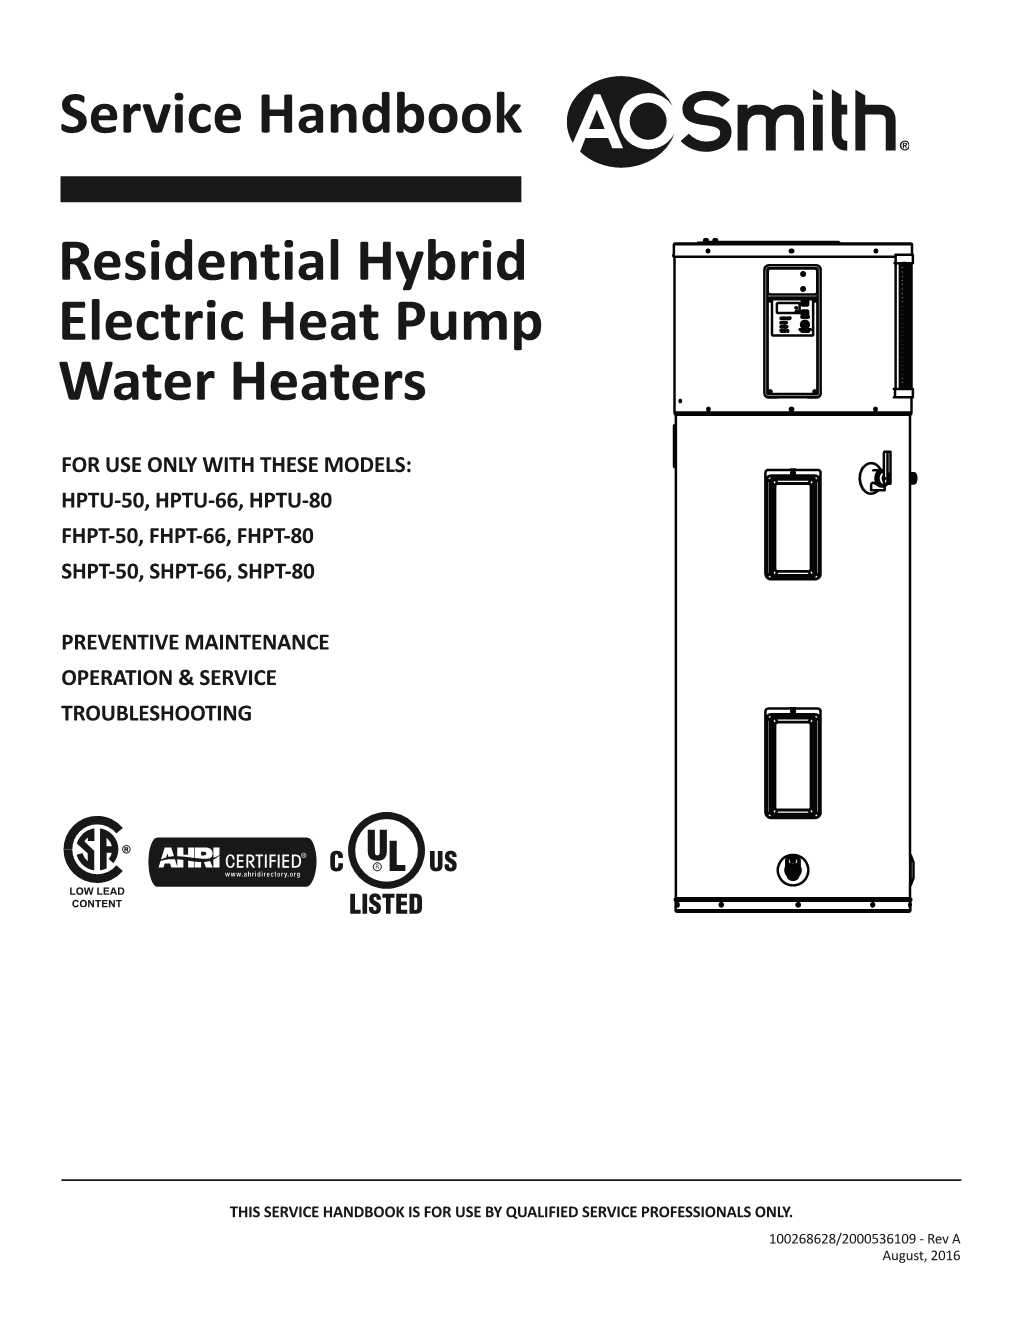 Service Handbook Residential Hybrid Electric Heat Pump Water Heaters